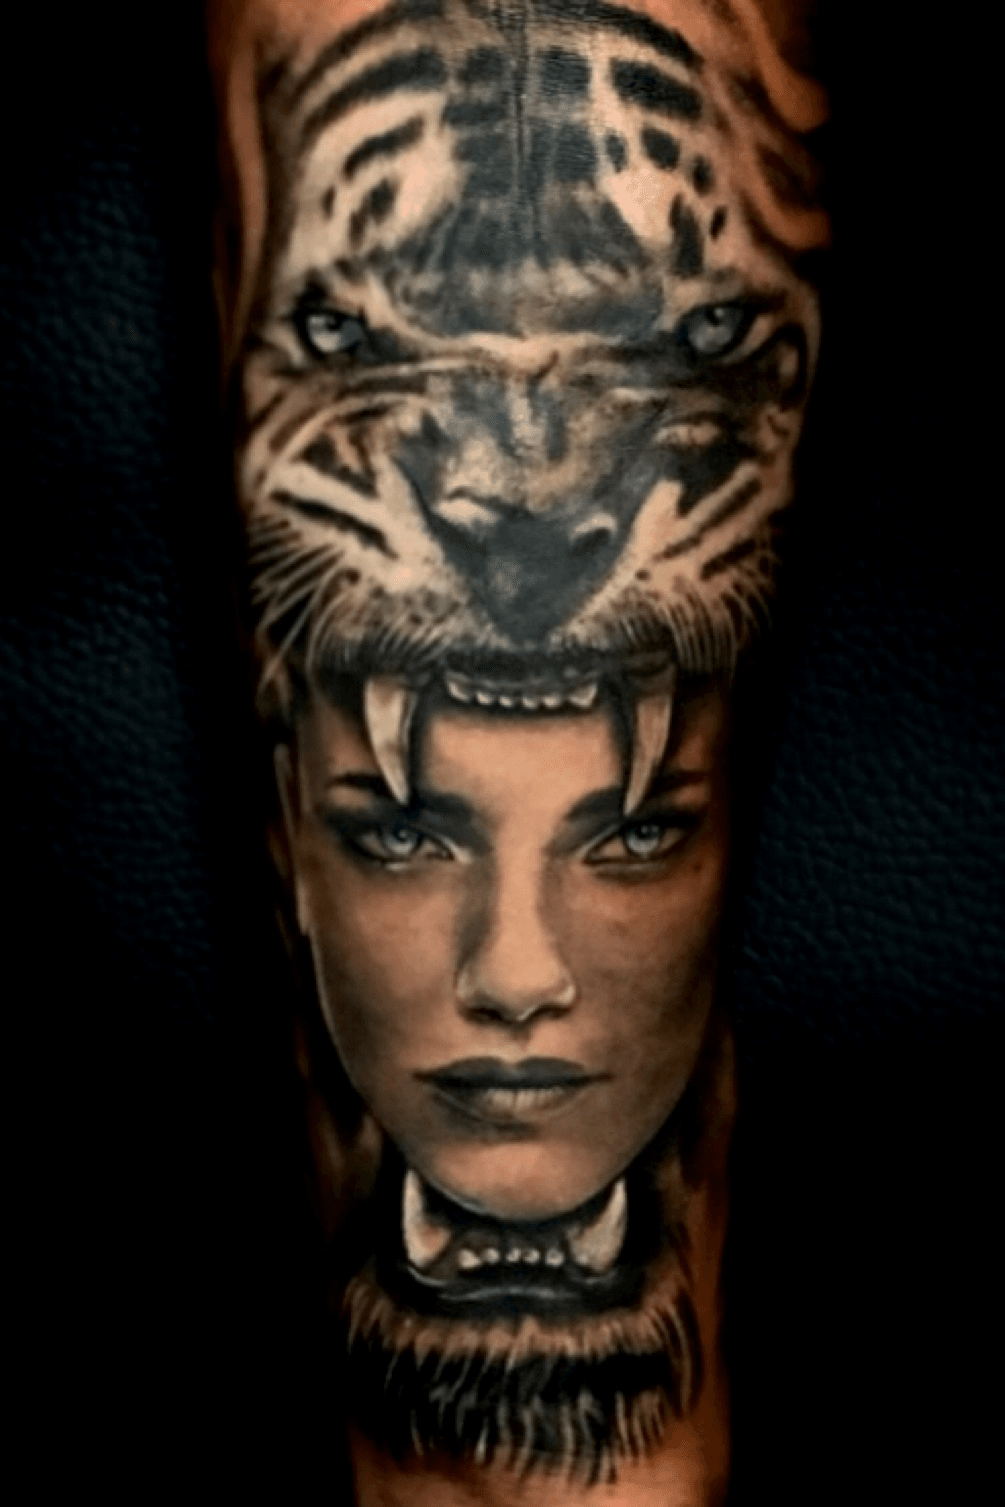 10 Domestic Cat Human Face Tattoo Animal Head Illustrations RoyaltyFree  Vector Graphics  Clip Art  iStock